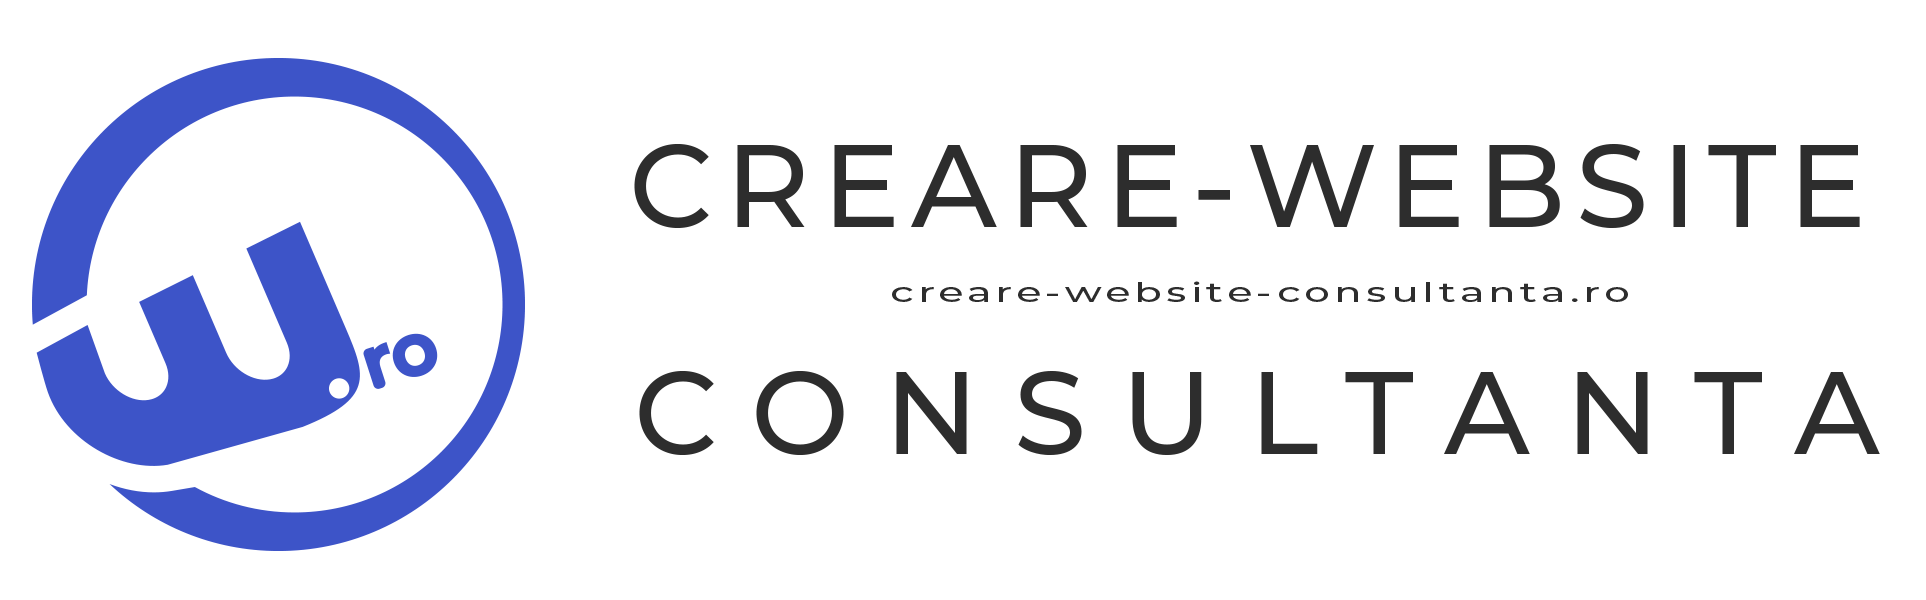 Creare Website-uri, Magazine online si Consultanta IT